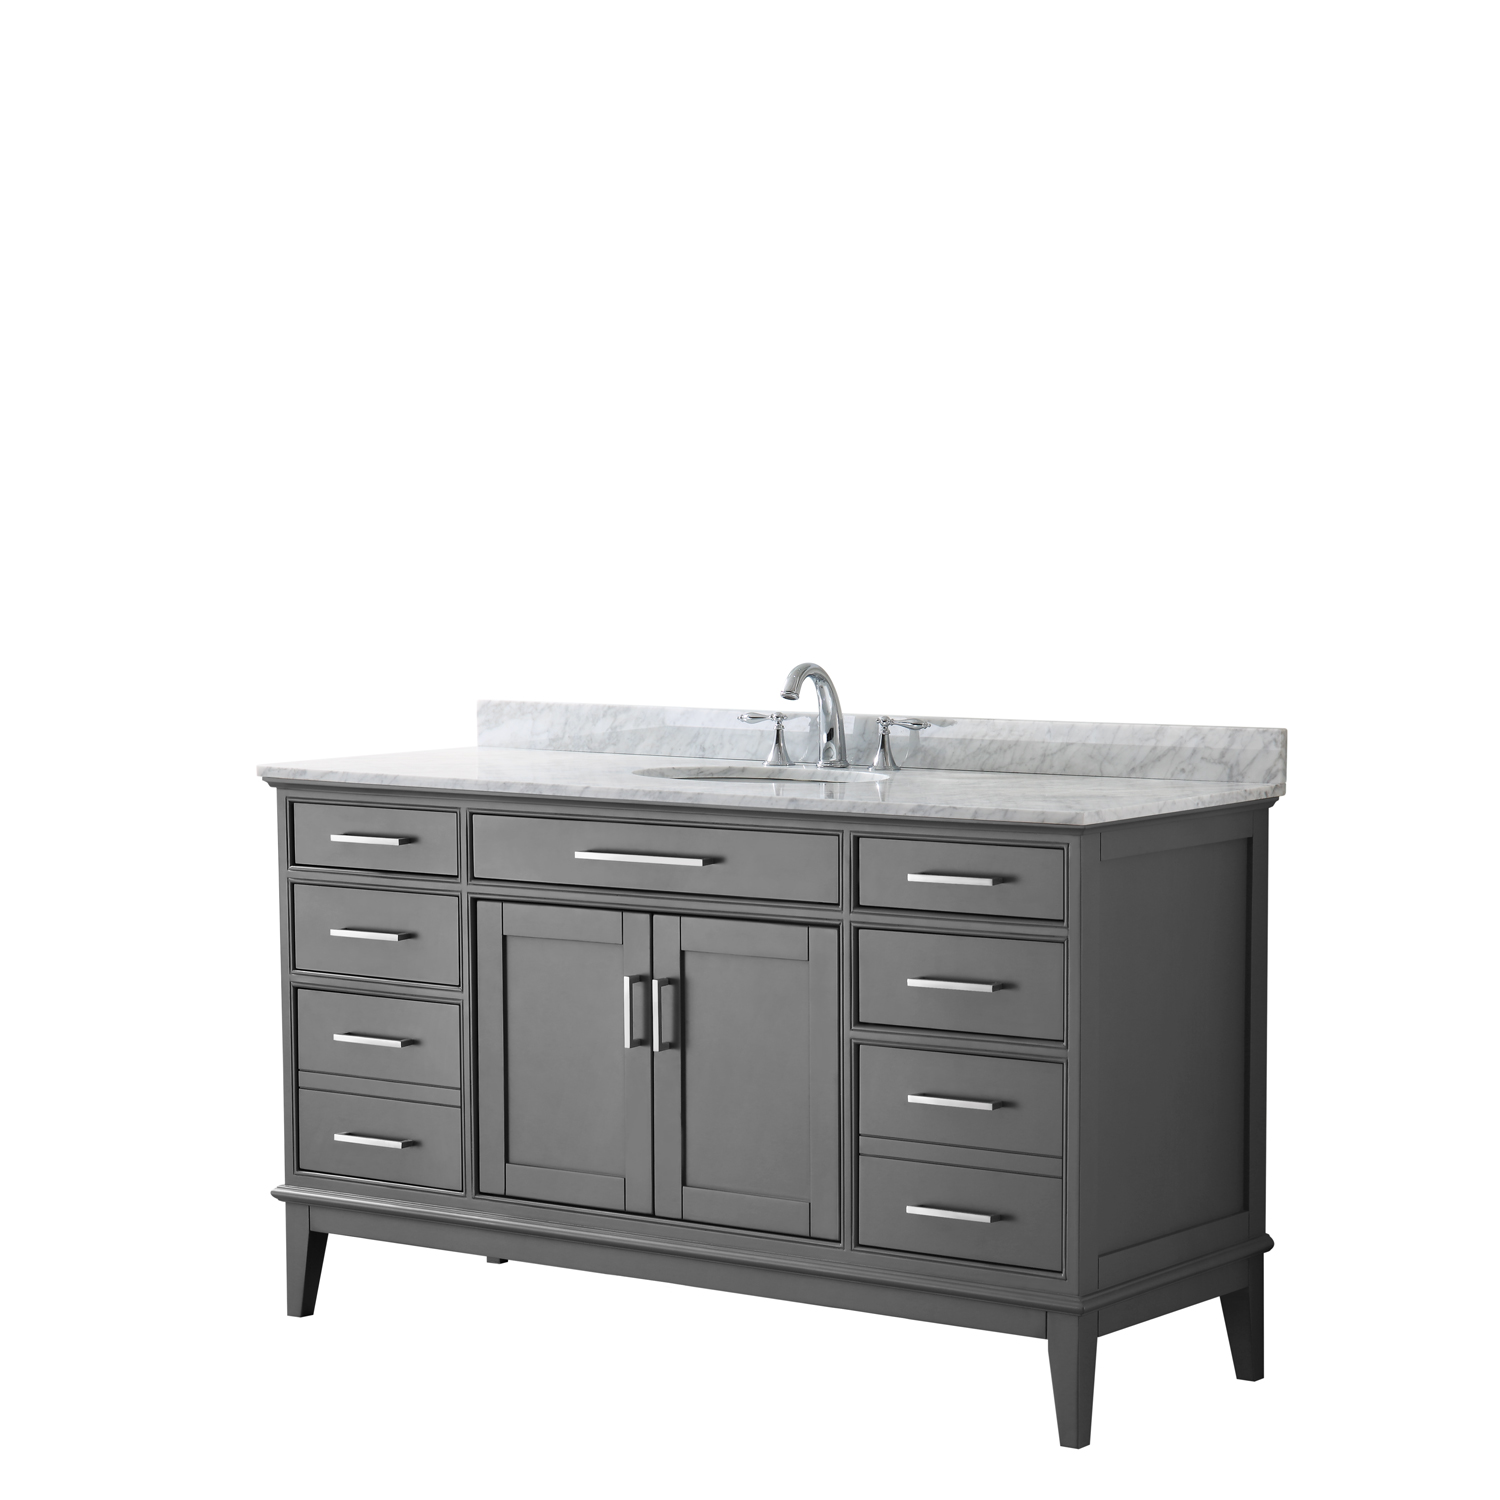 Contemporary 60" Single Bathroom Vanity in Dark Gray, White Carrara Marble Countertop with Undermount Sink, and Mirror